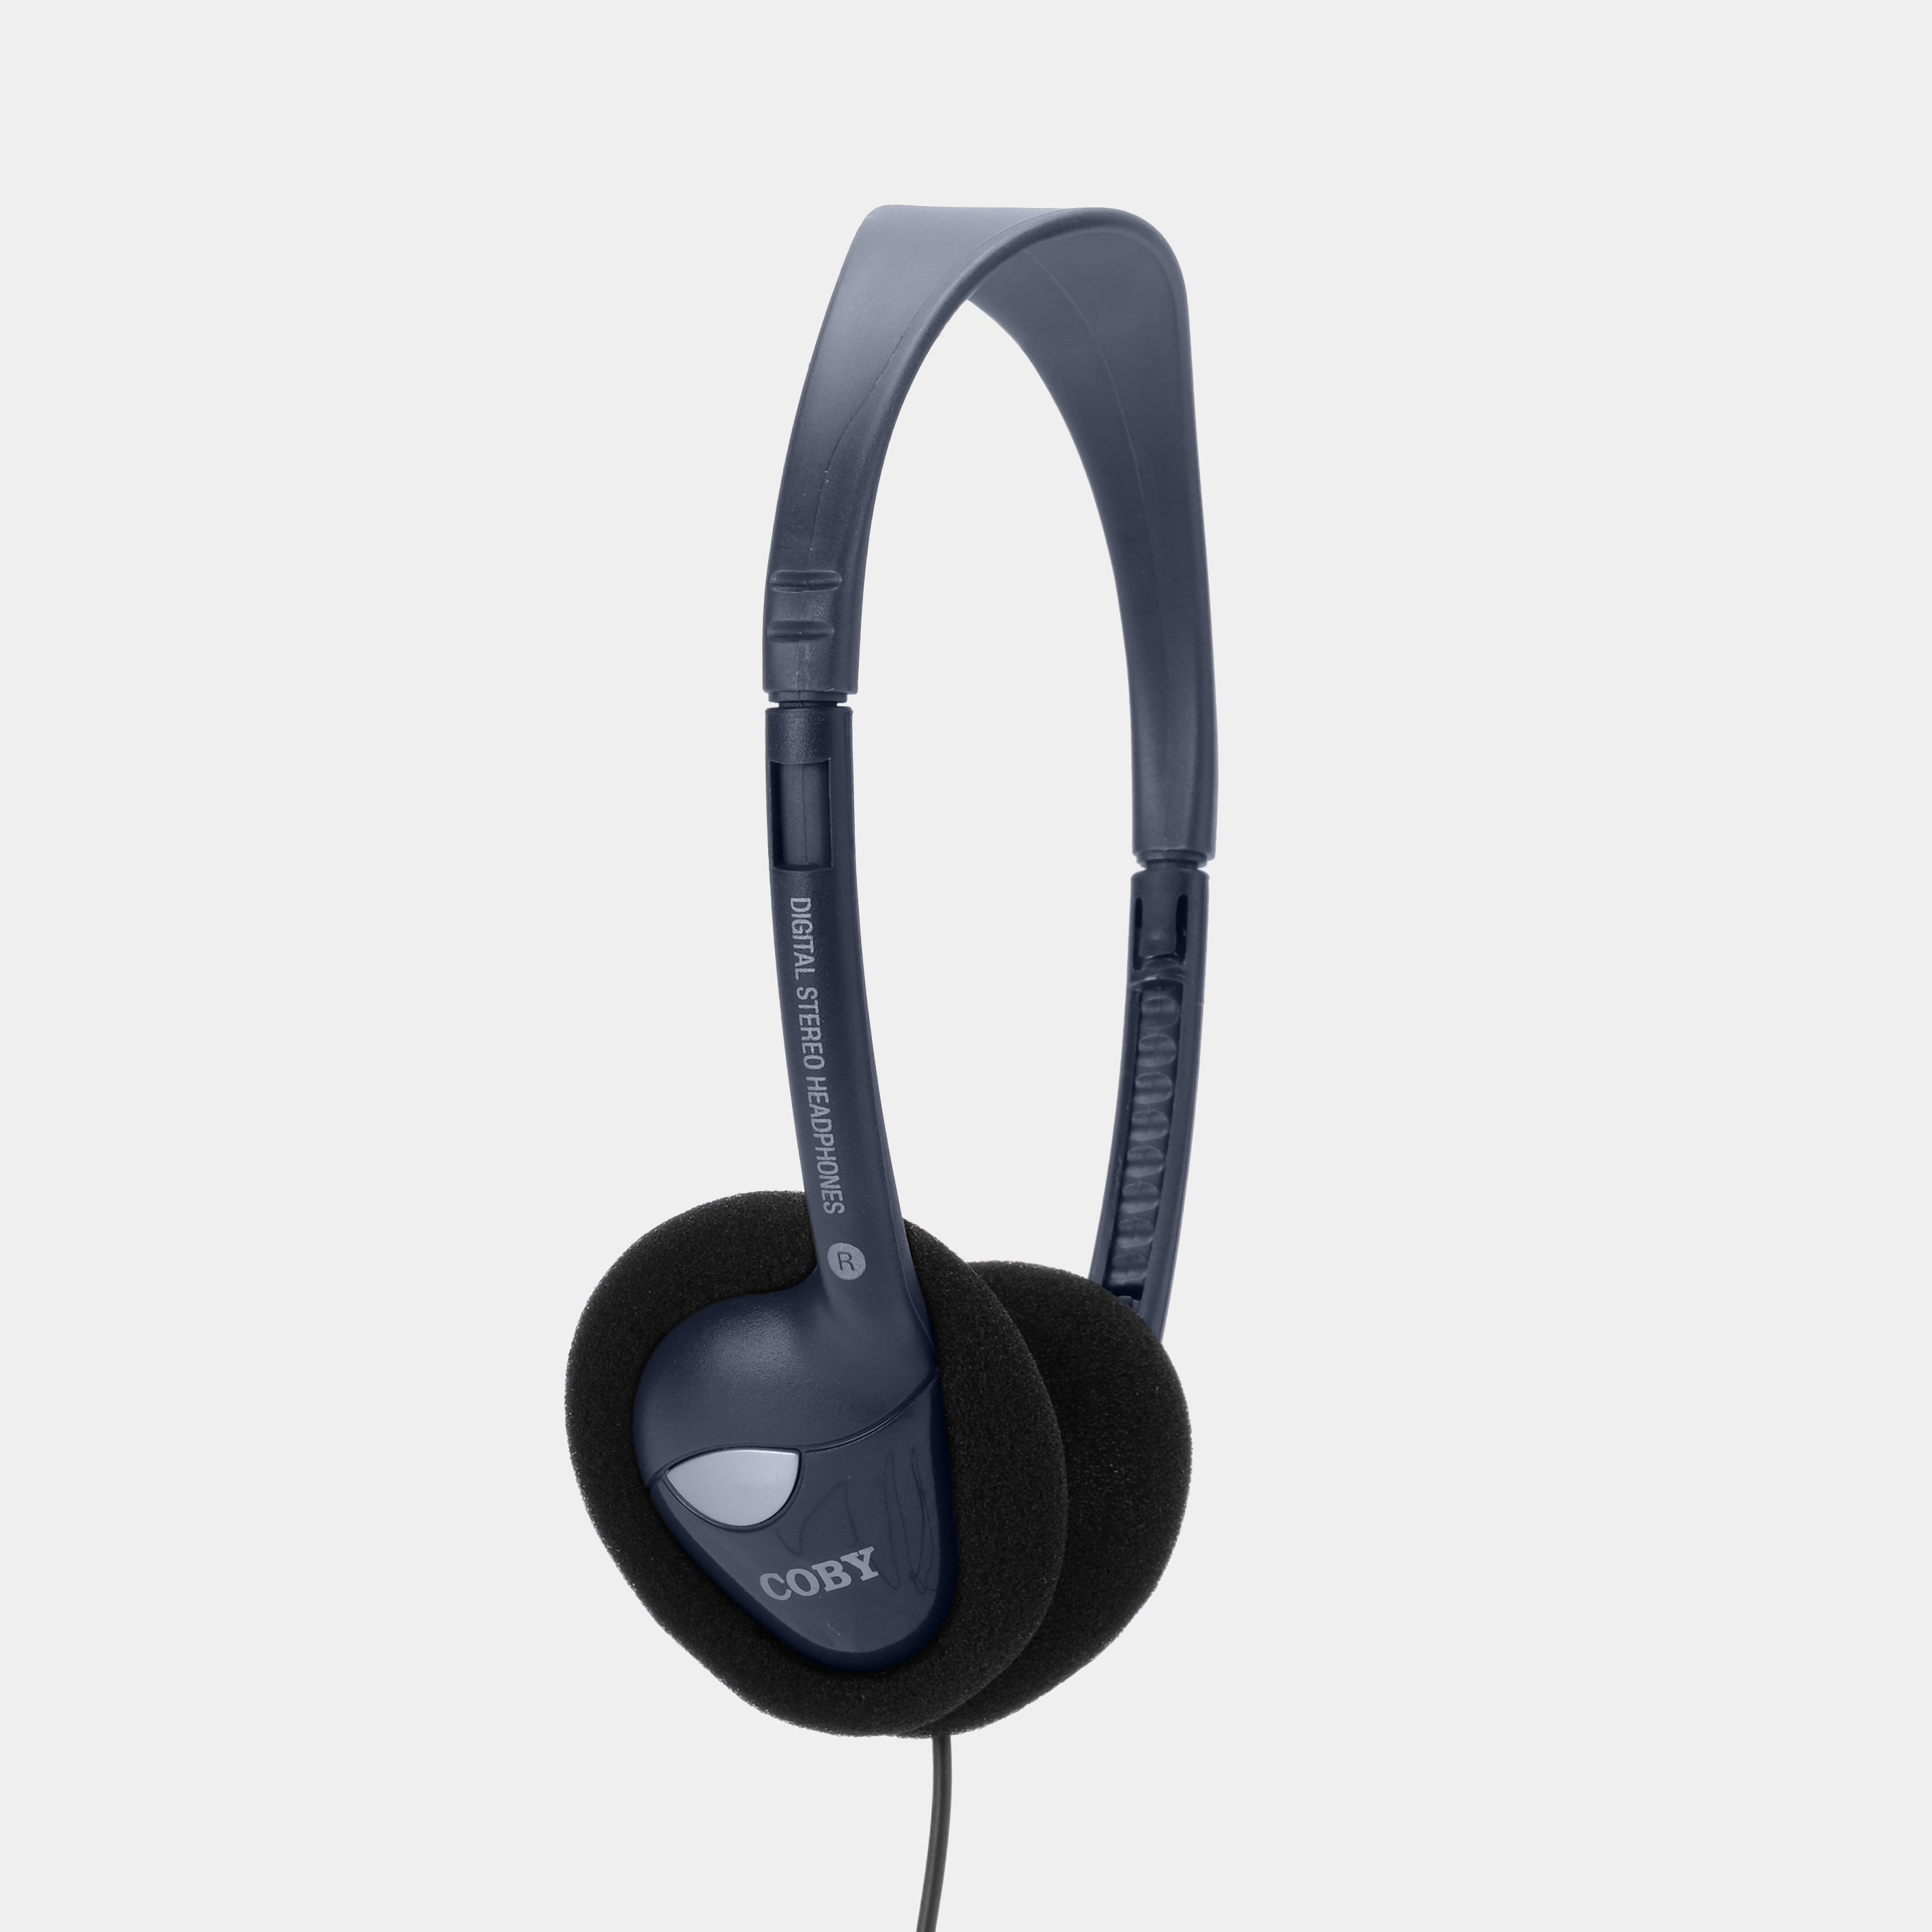 Coby Digital Stereo On-Ear Headphones